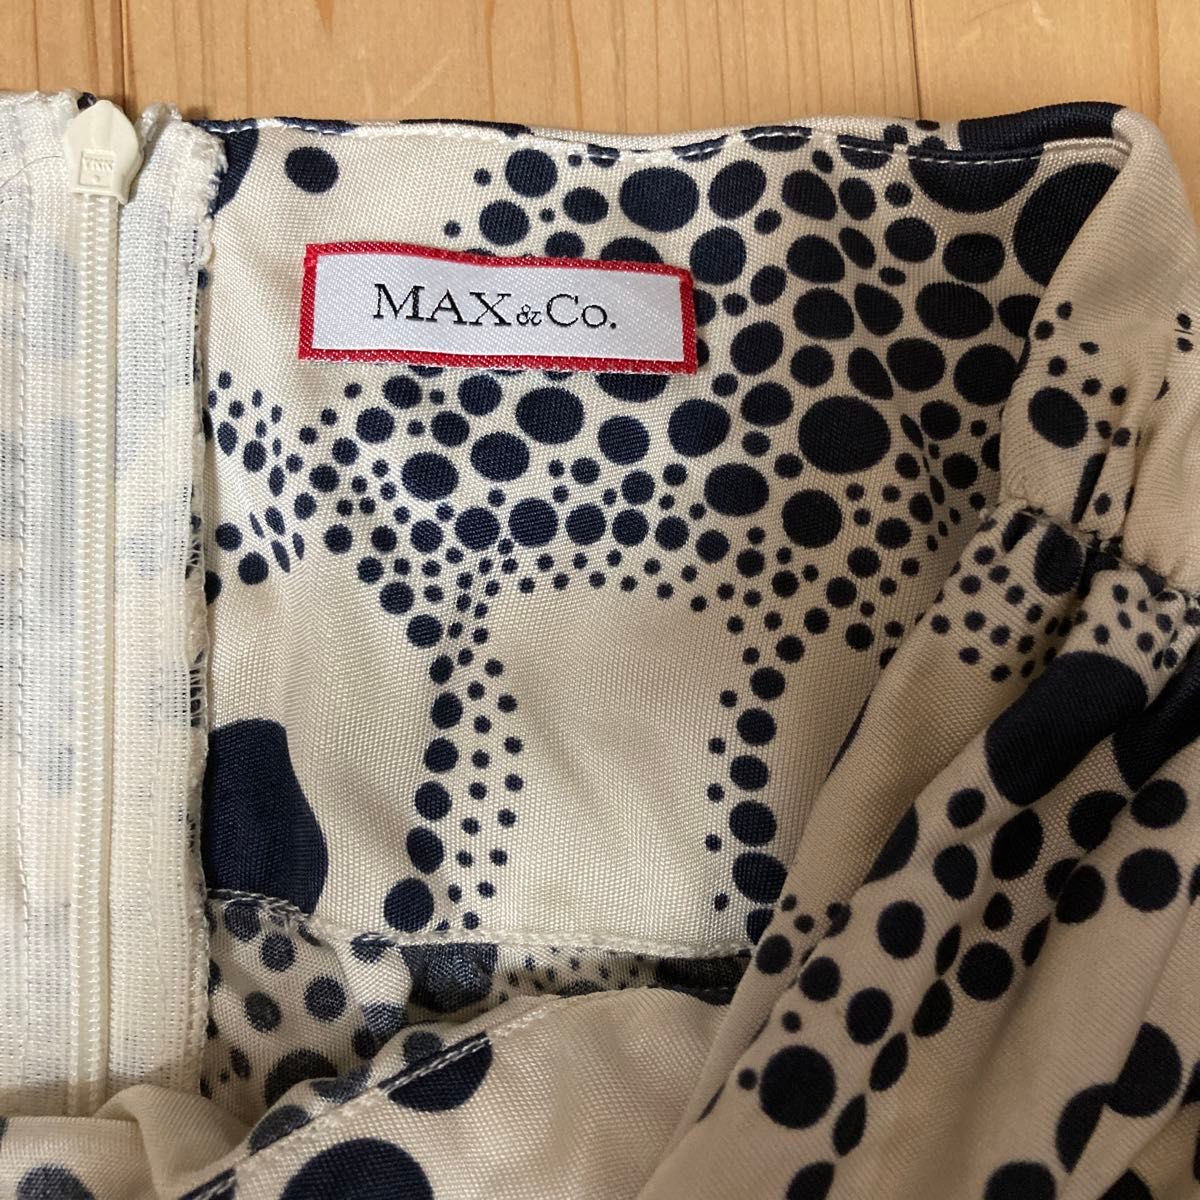 MAX&Co.マックスアンドコー/シルクの水玉スカート/JERSEY SKIRT/RN73136/MOD.T771988